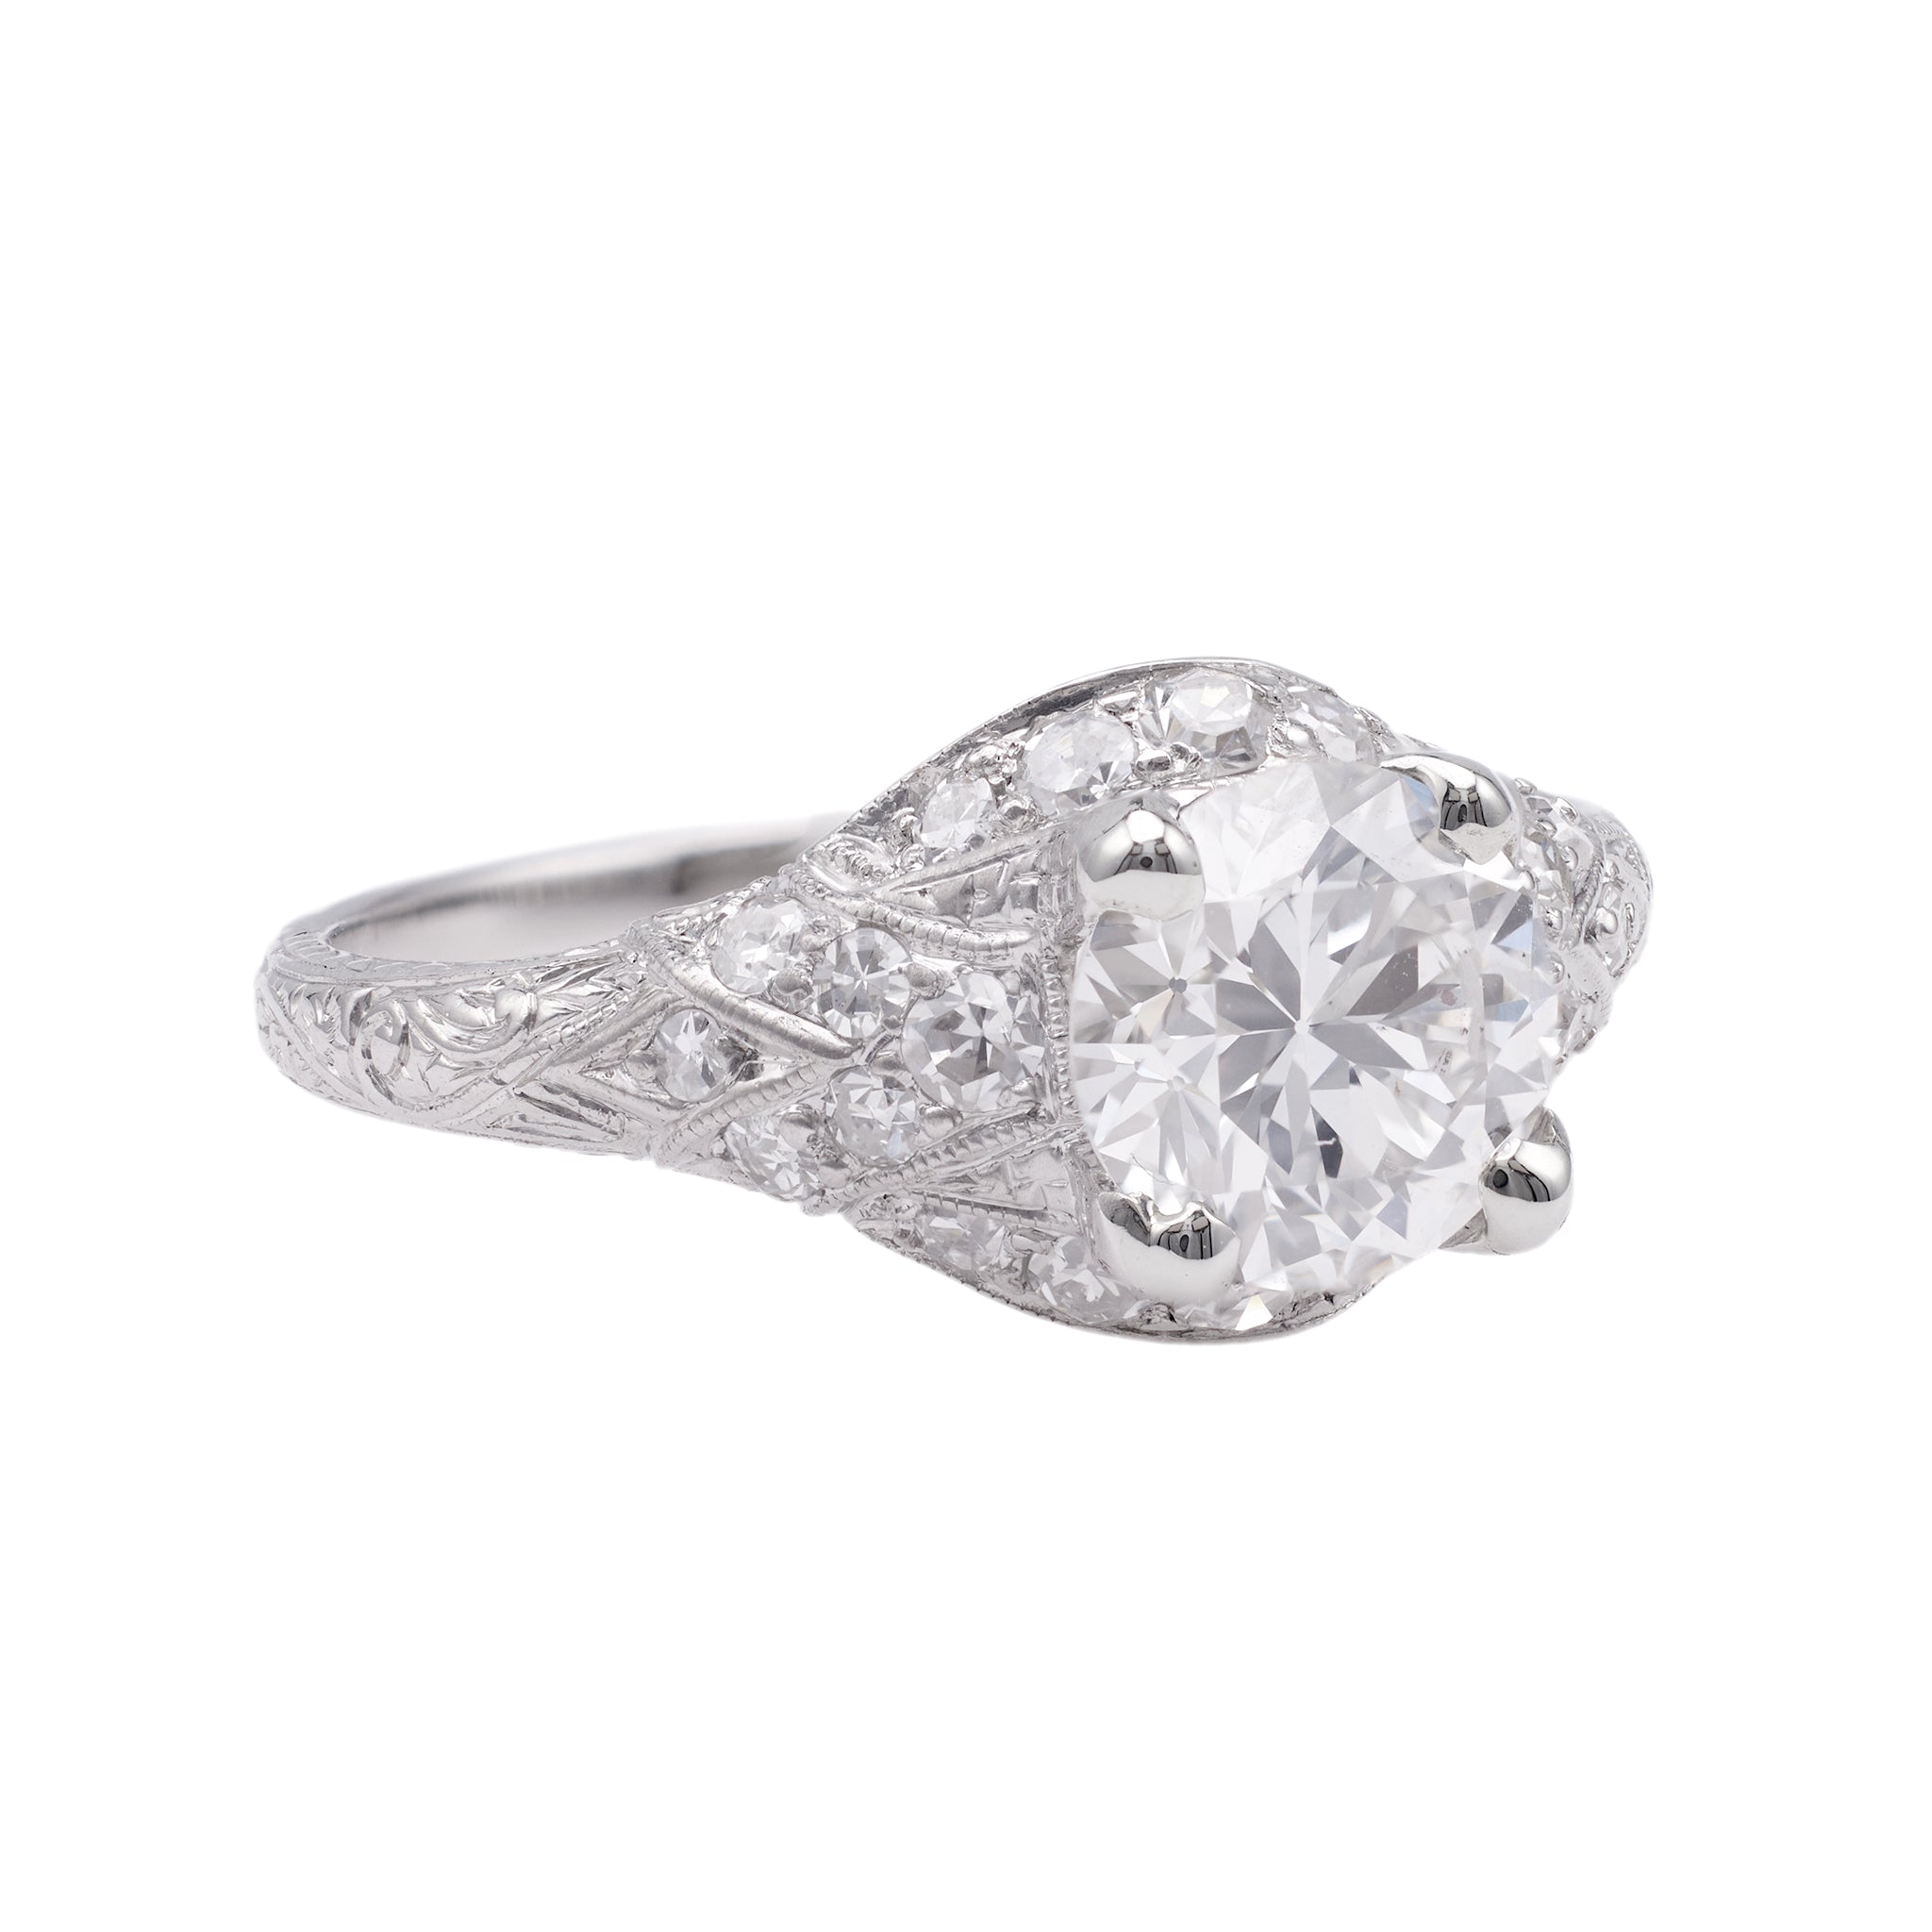 Art Deco GIA 1.16 Carat Transitional Cut Diamond Platinum Ring Rings Jack Weir & Sons   